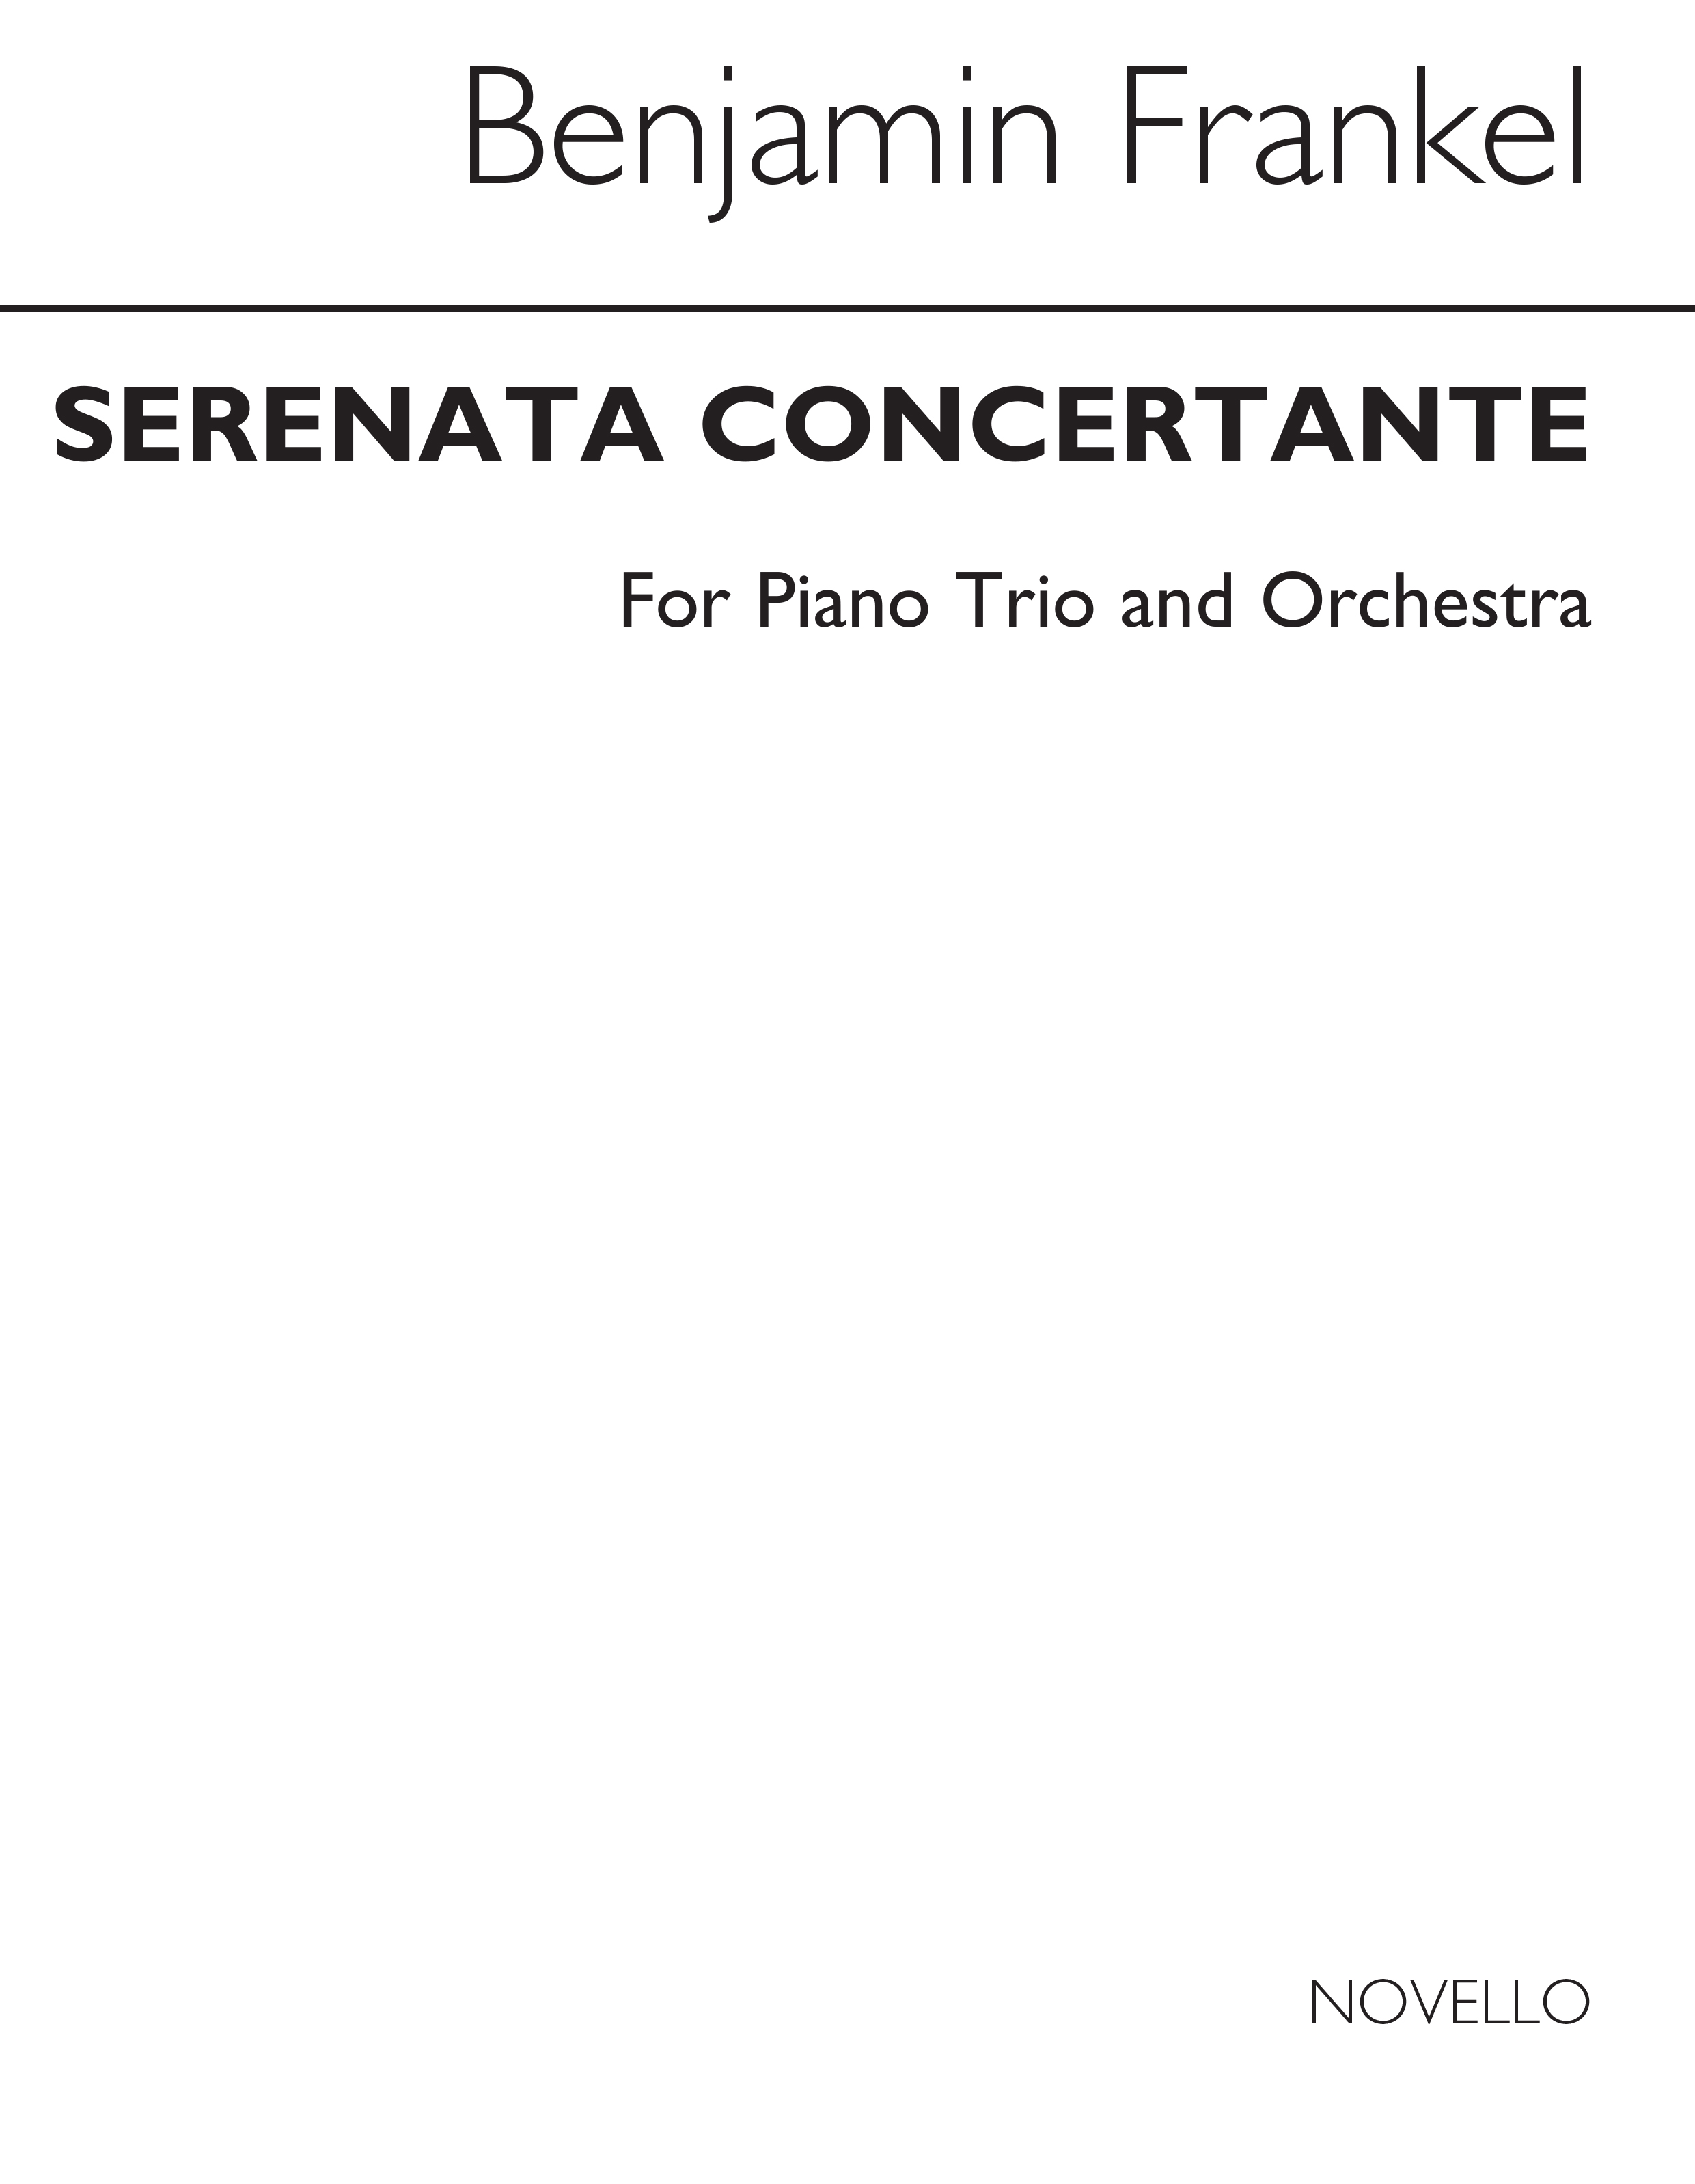 Benjamin Frankel: Serenata Concertante (Score and Parts)